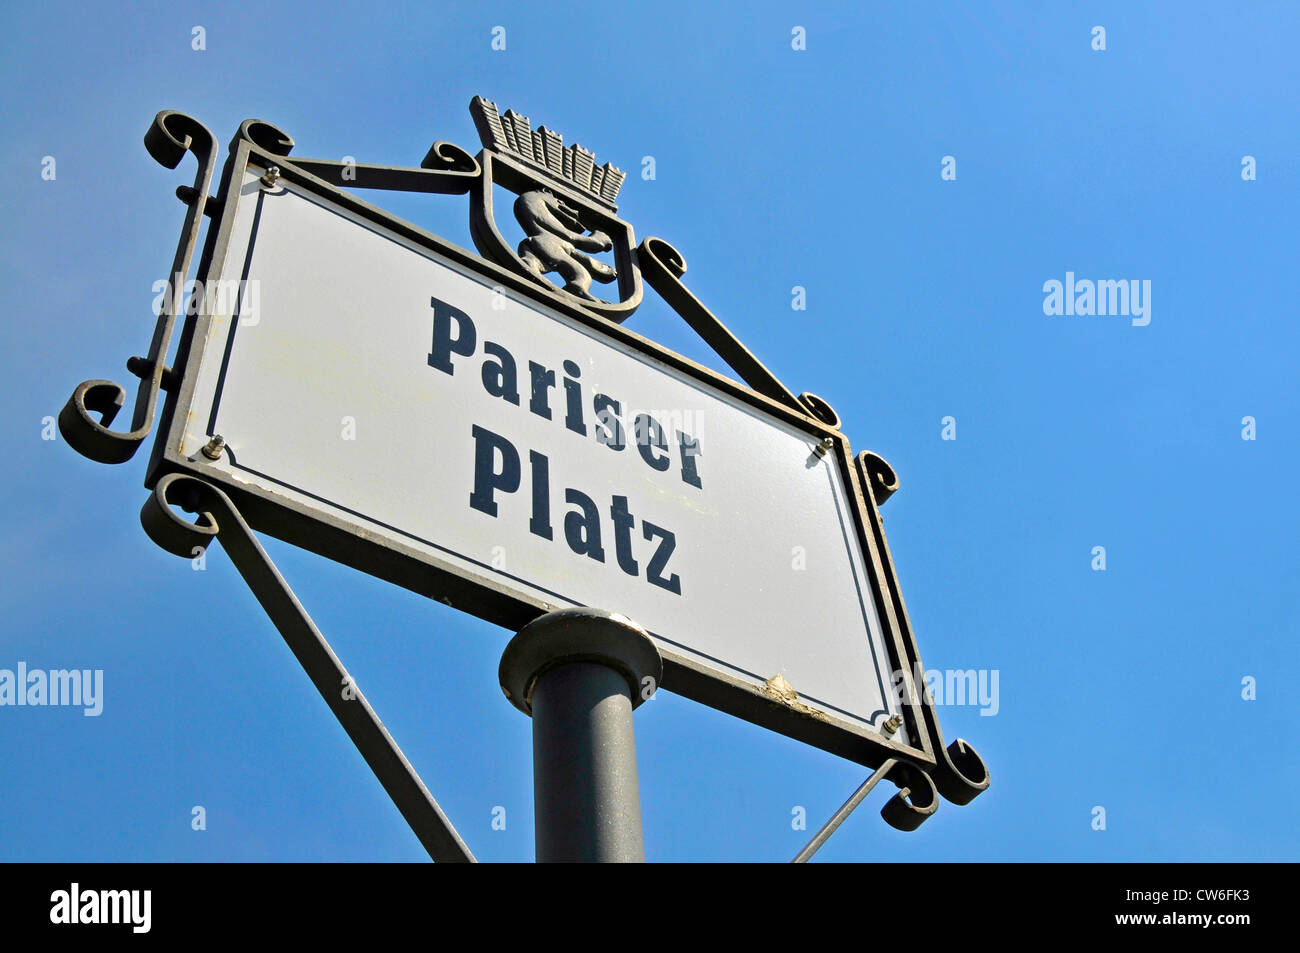 Pariser Platz, sign at Brandenburg Gate Stock Photo